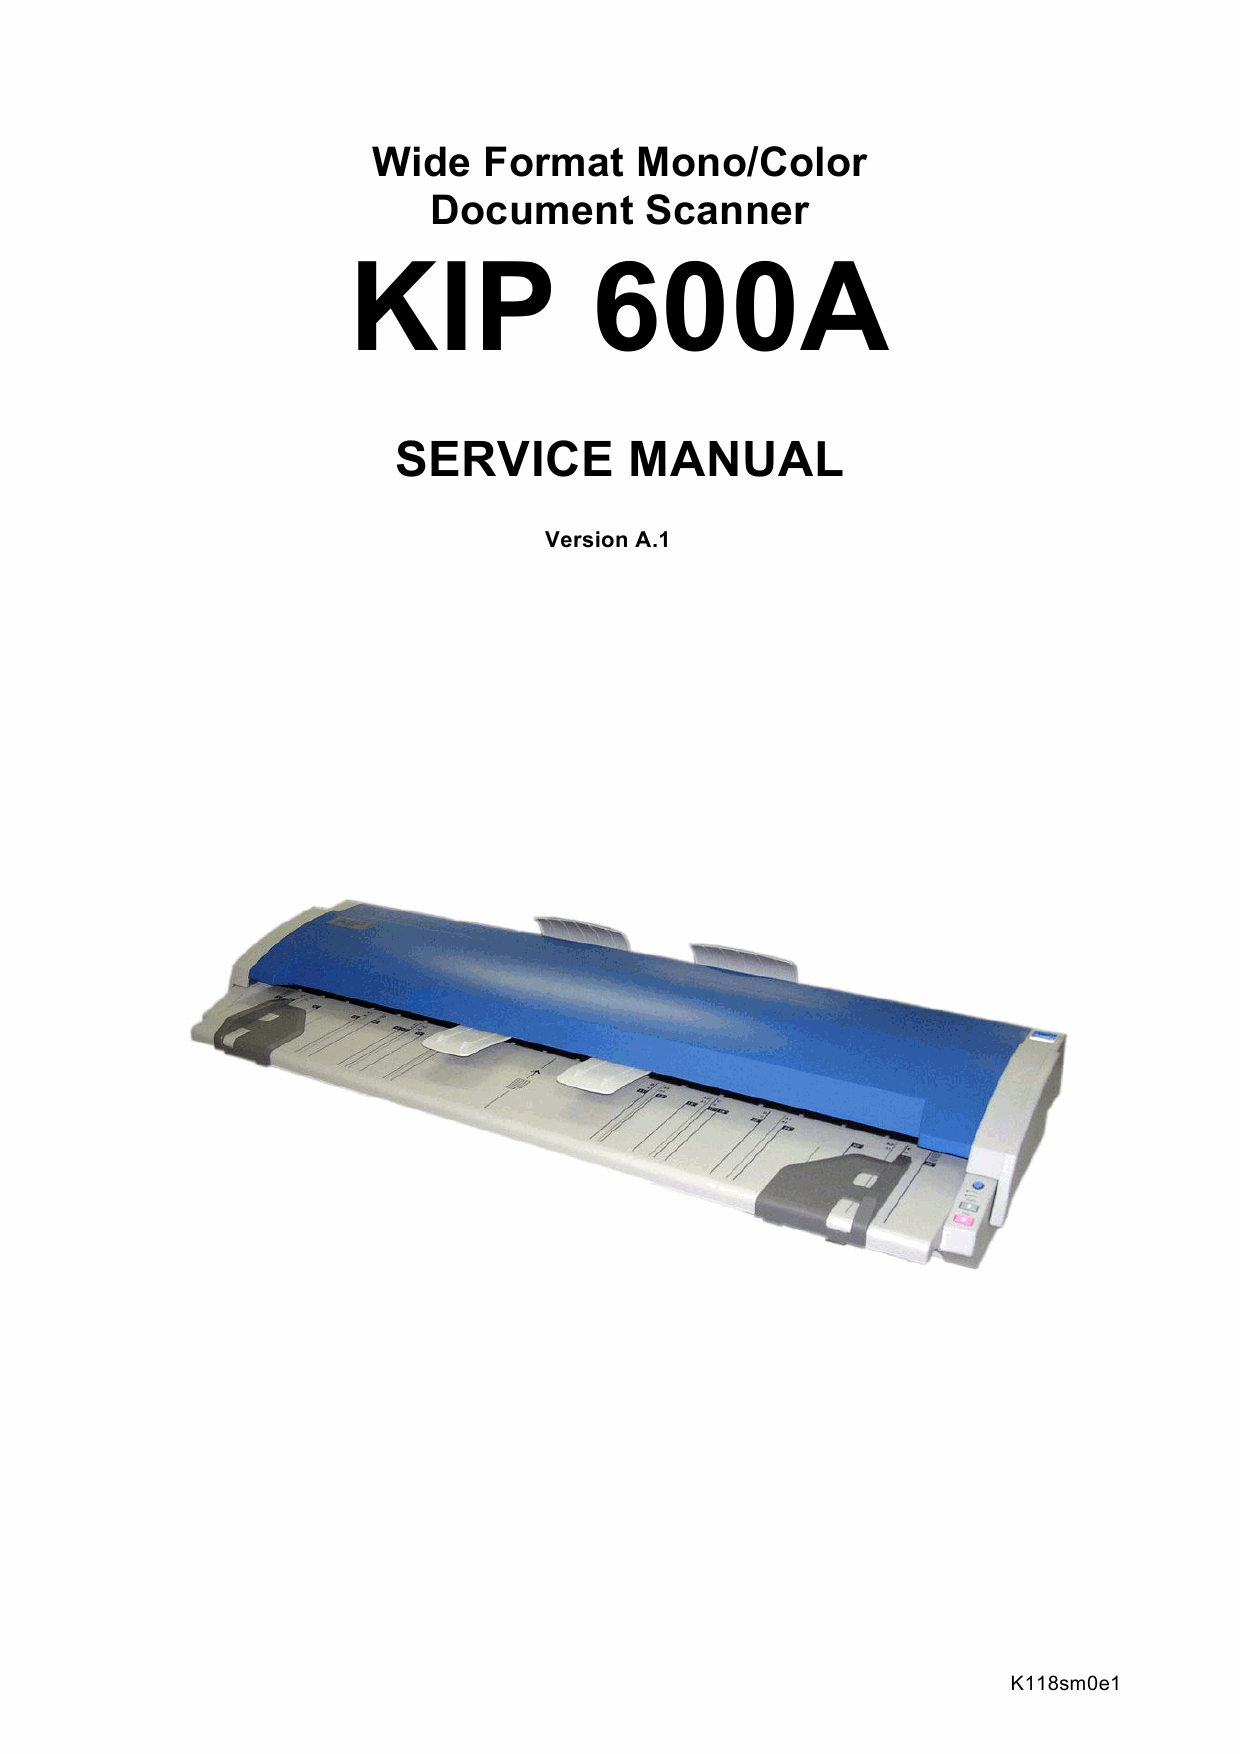 KIP 600A Service Manual-1